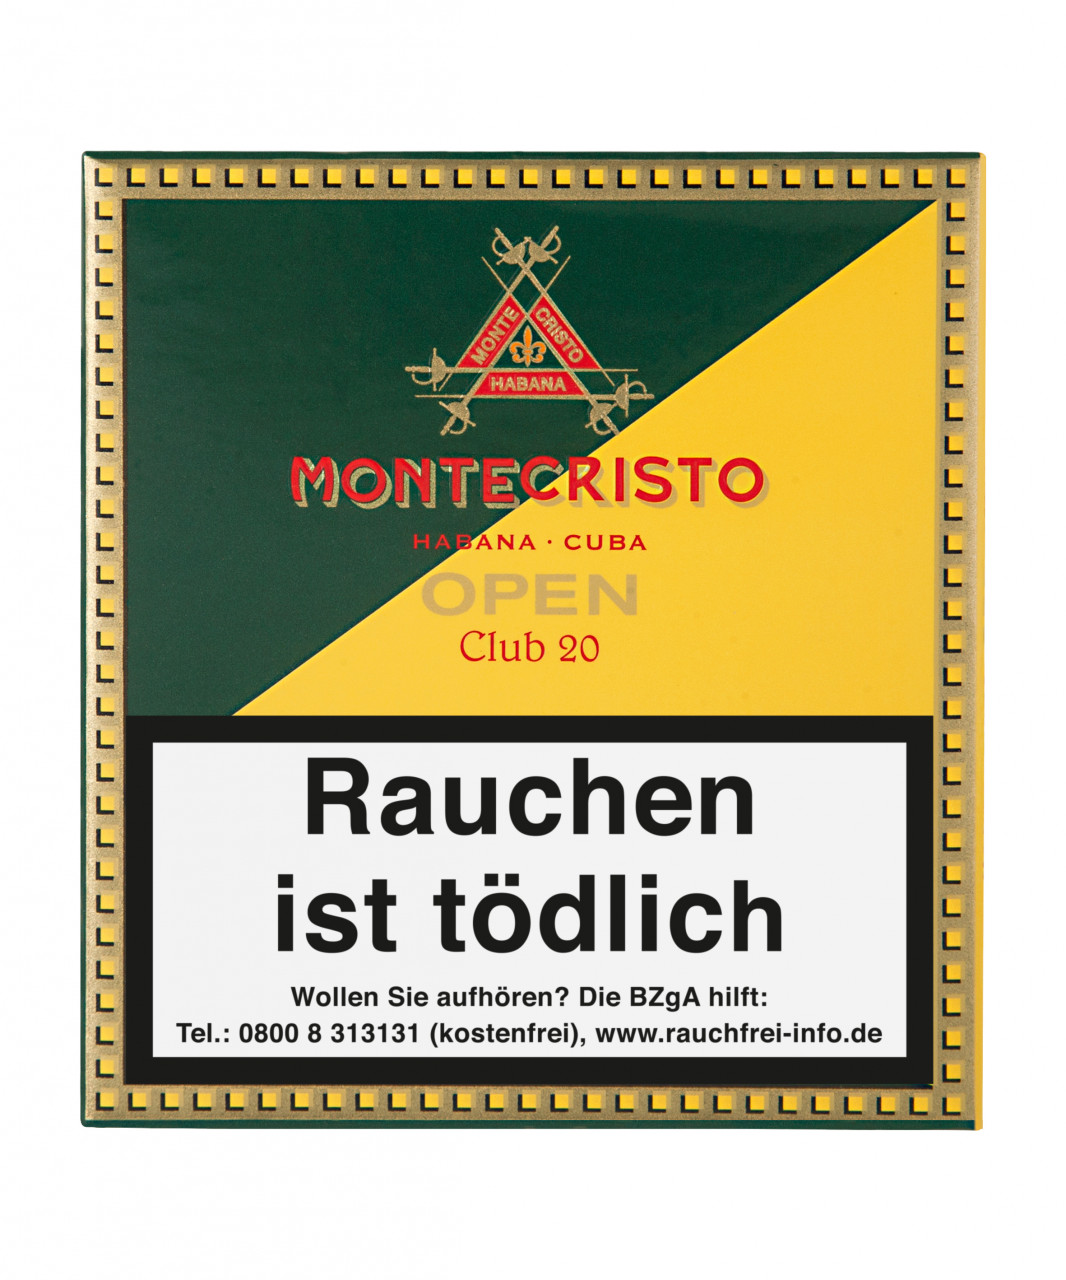 Montecristo Open Club